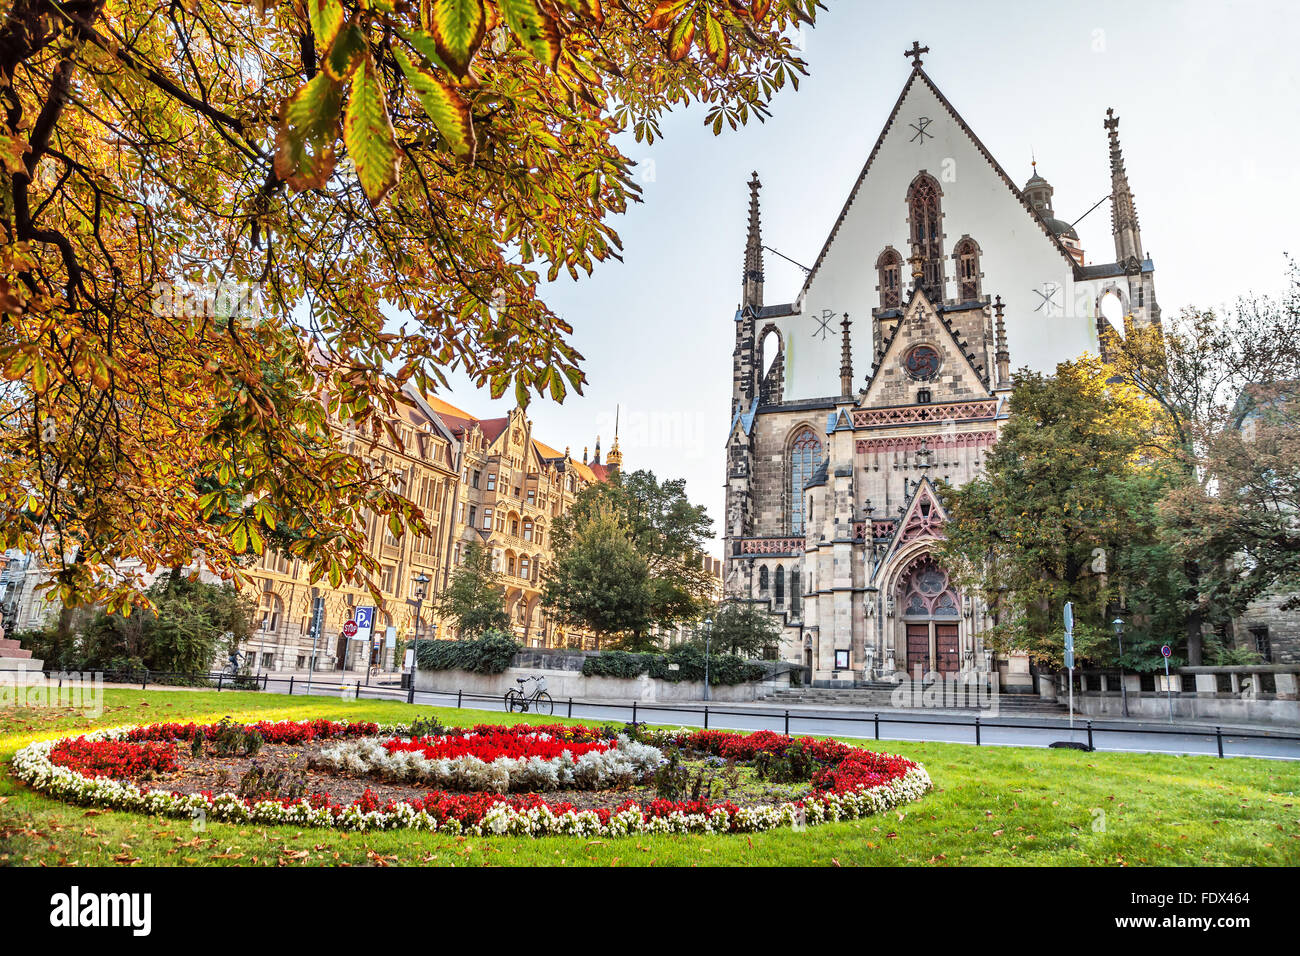 Facade of St. Thomas Church (Thomaskirche) in Leipzig, Germany Stock Photo